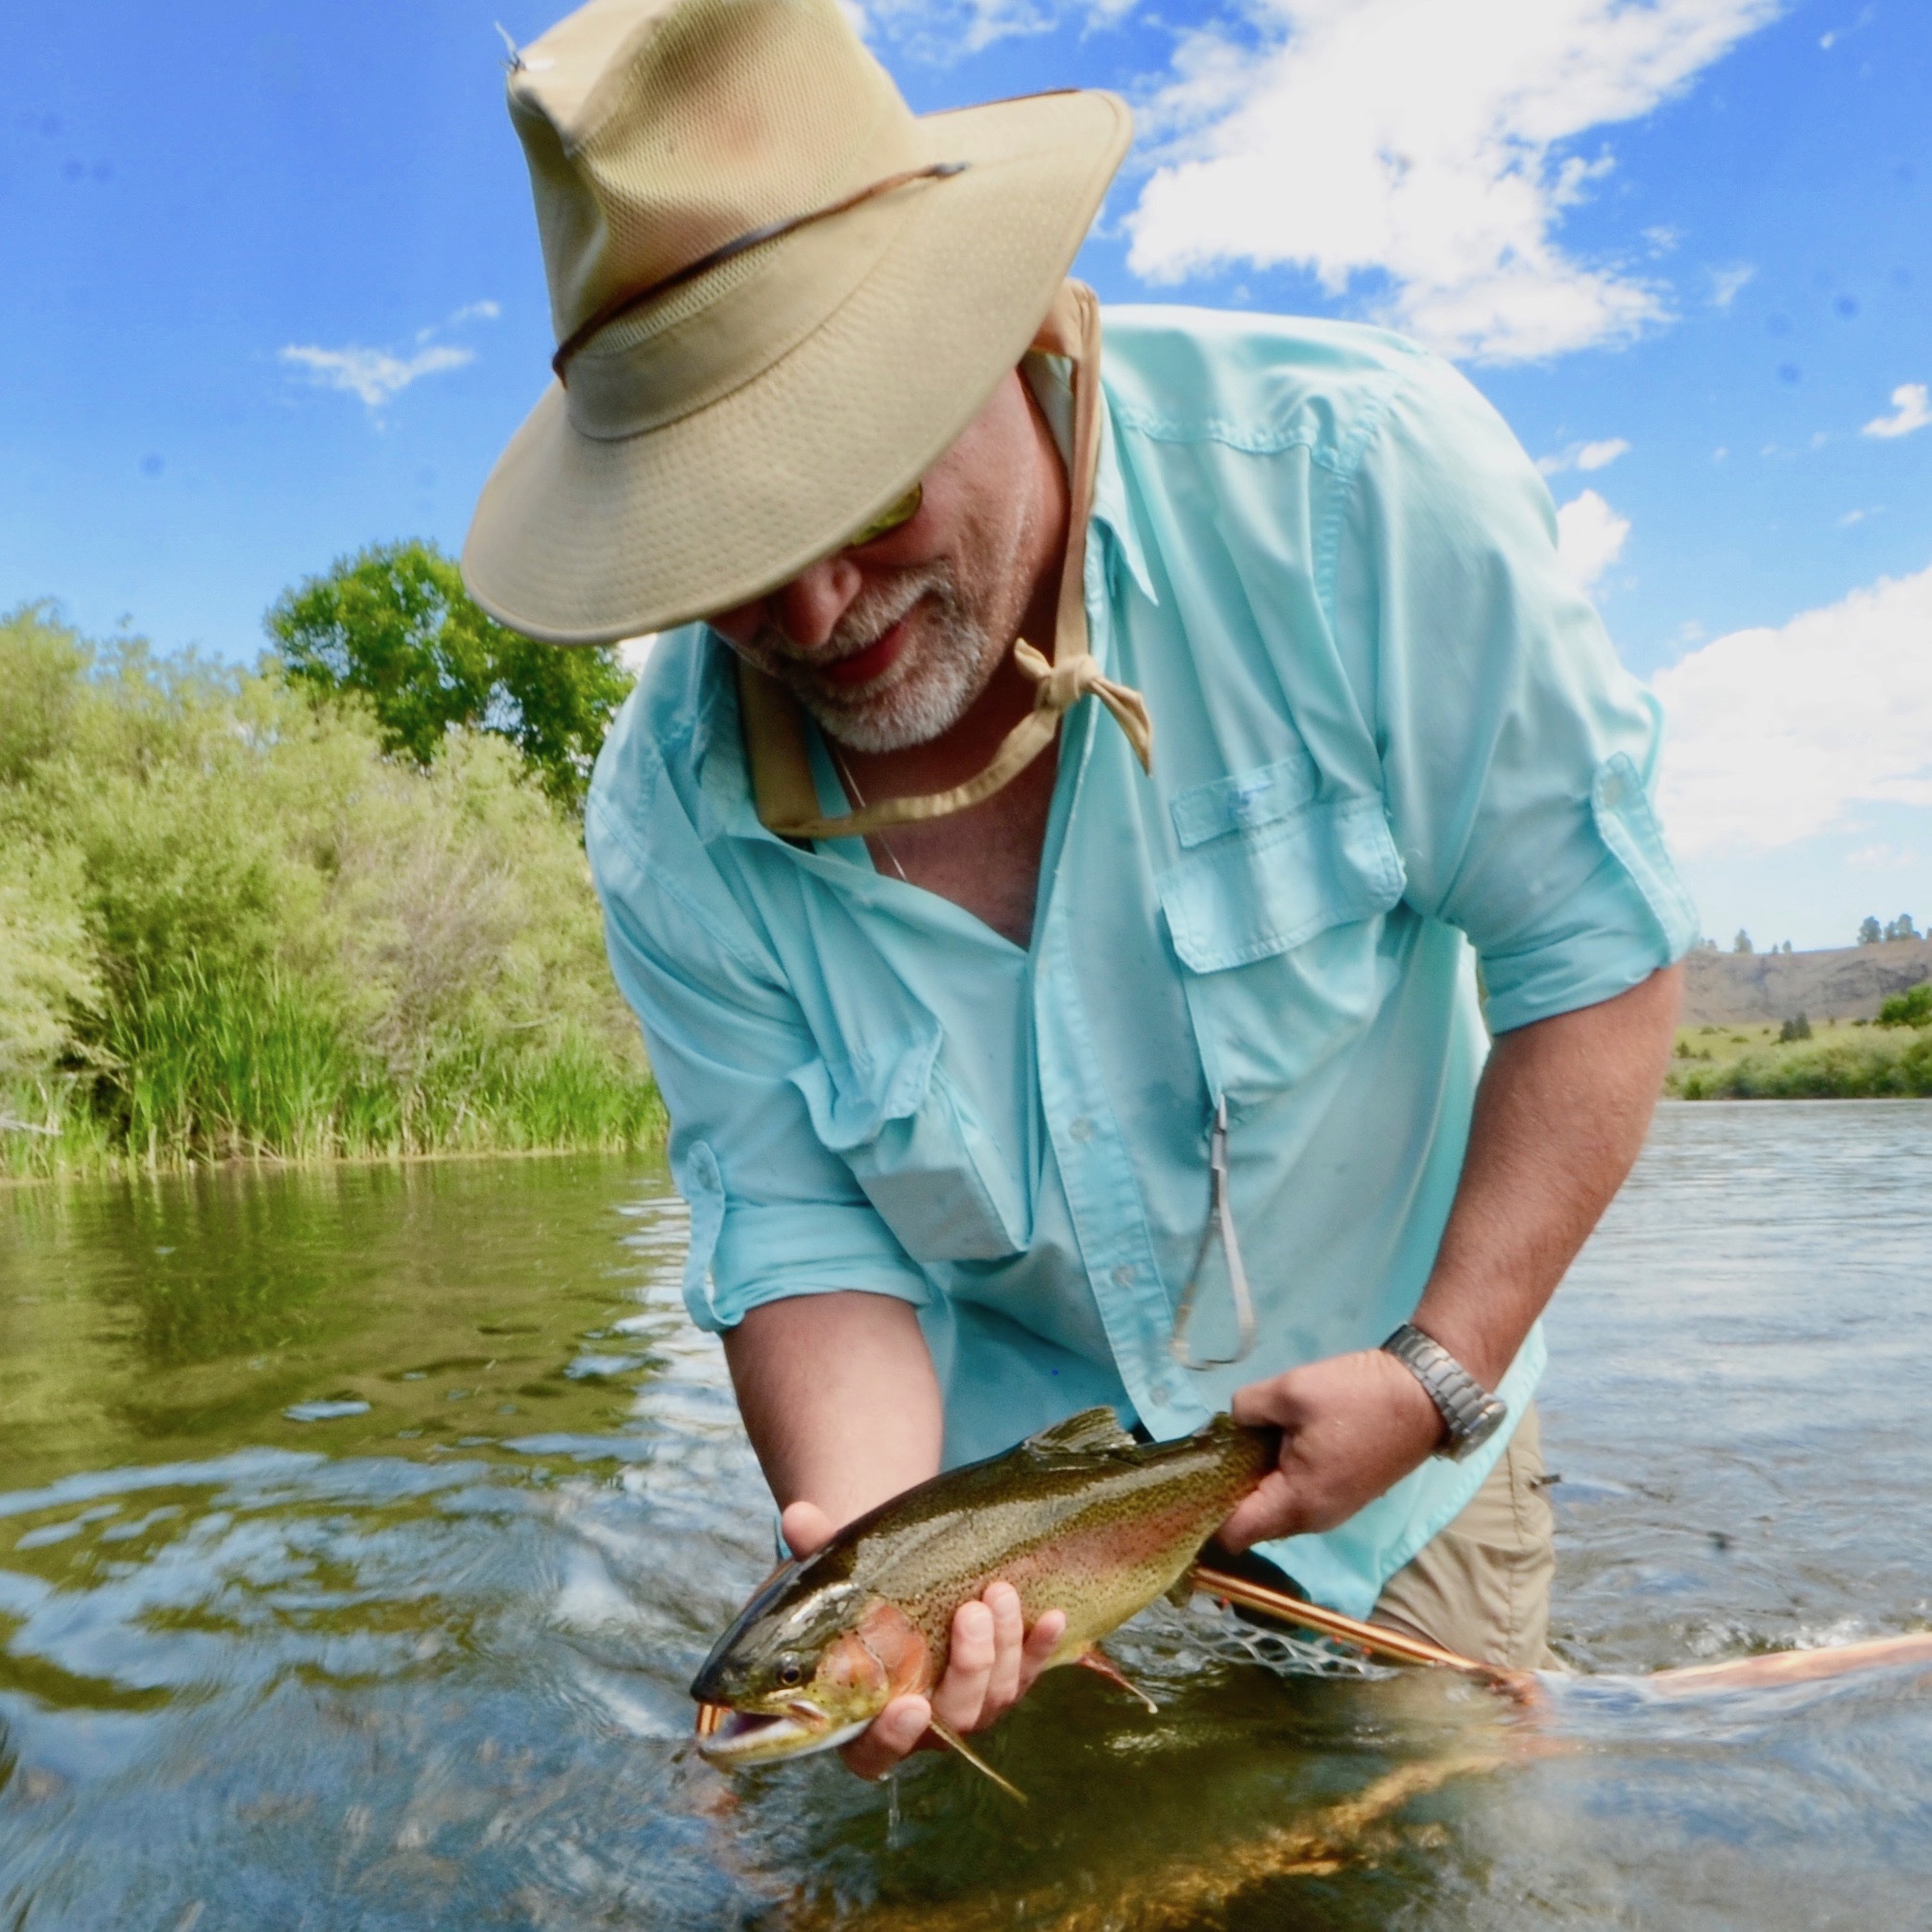 Monday July 15th Missouri River Fishing Report